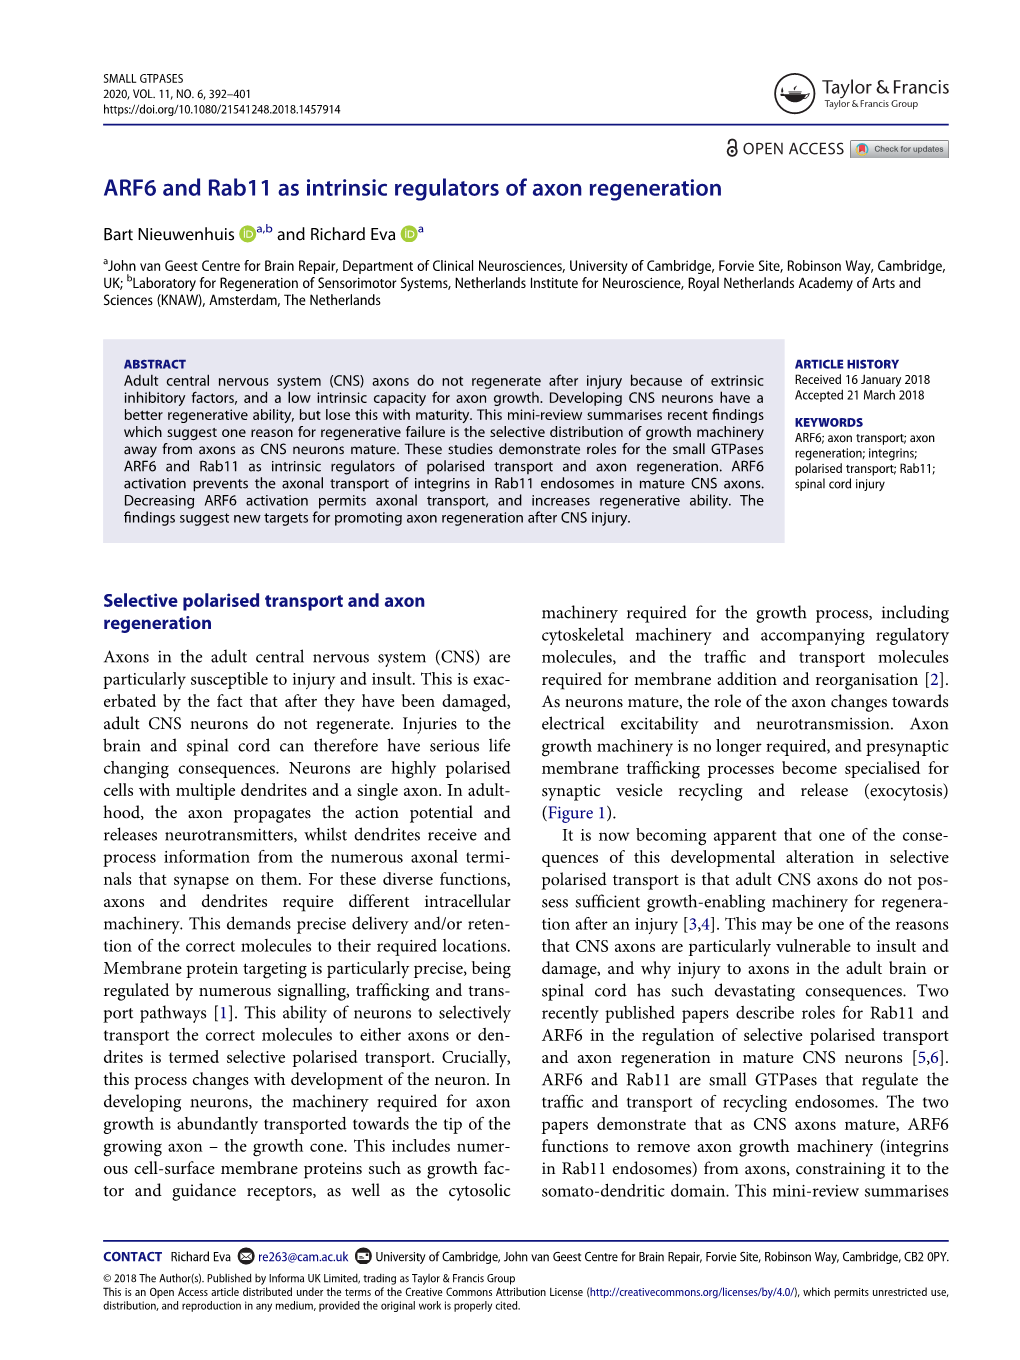 ARF6 and Rab11 As Intrinsic Regulators of Axon Regeneration